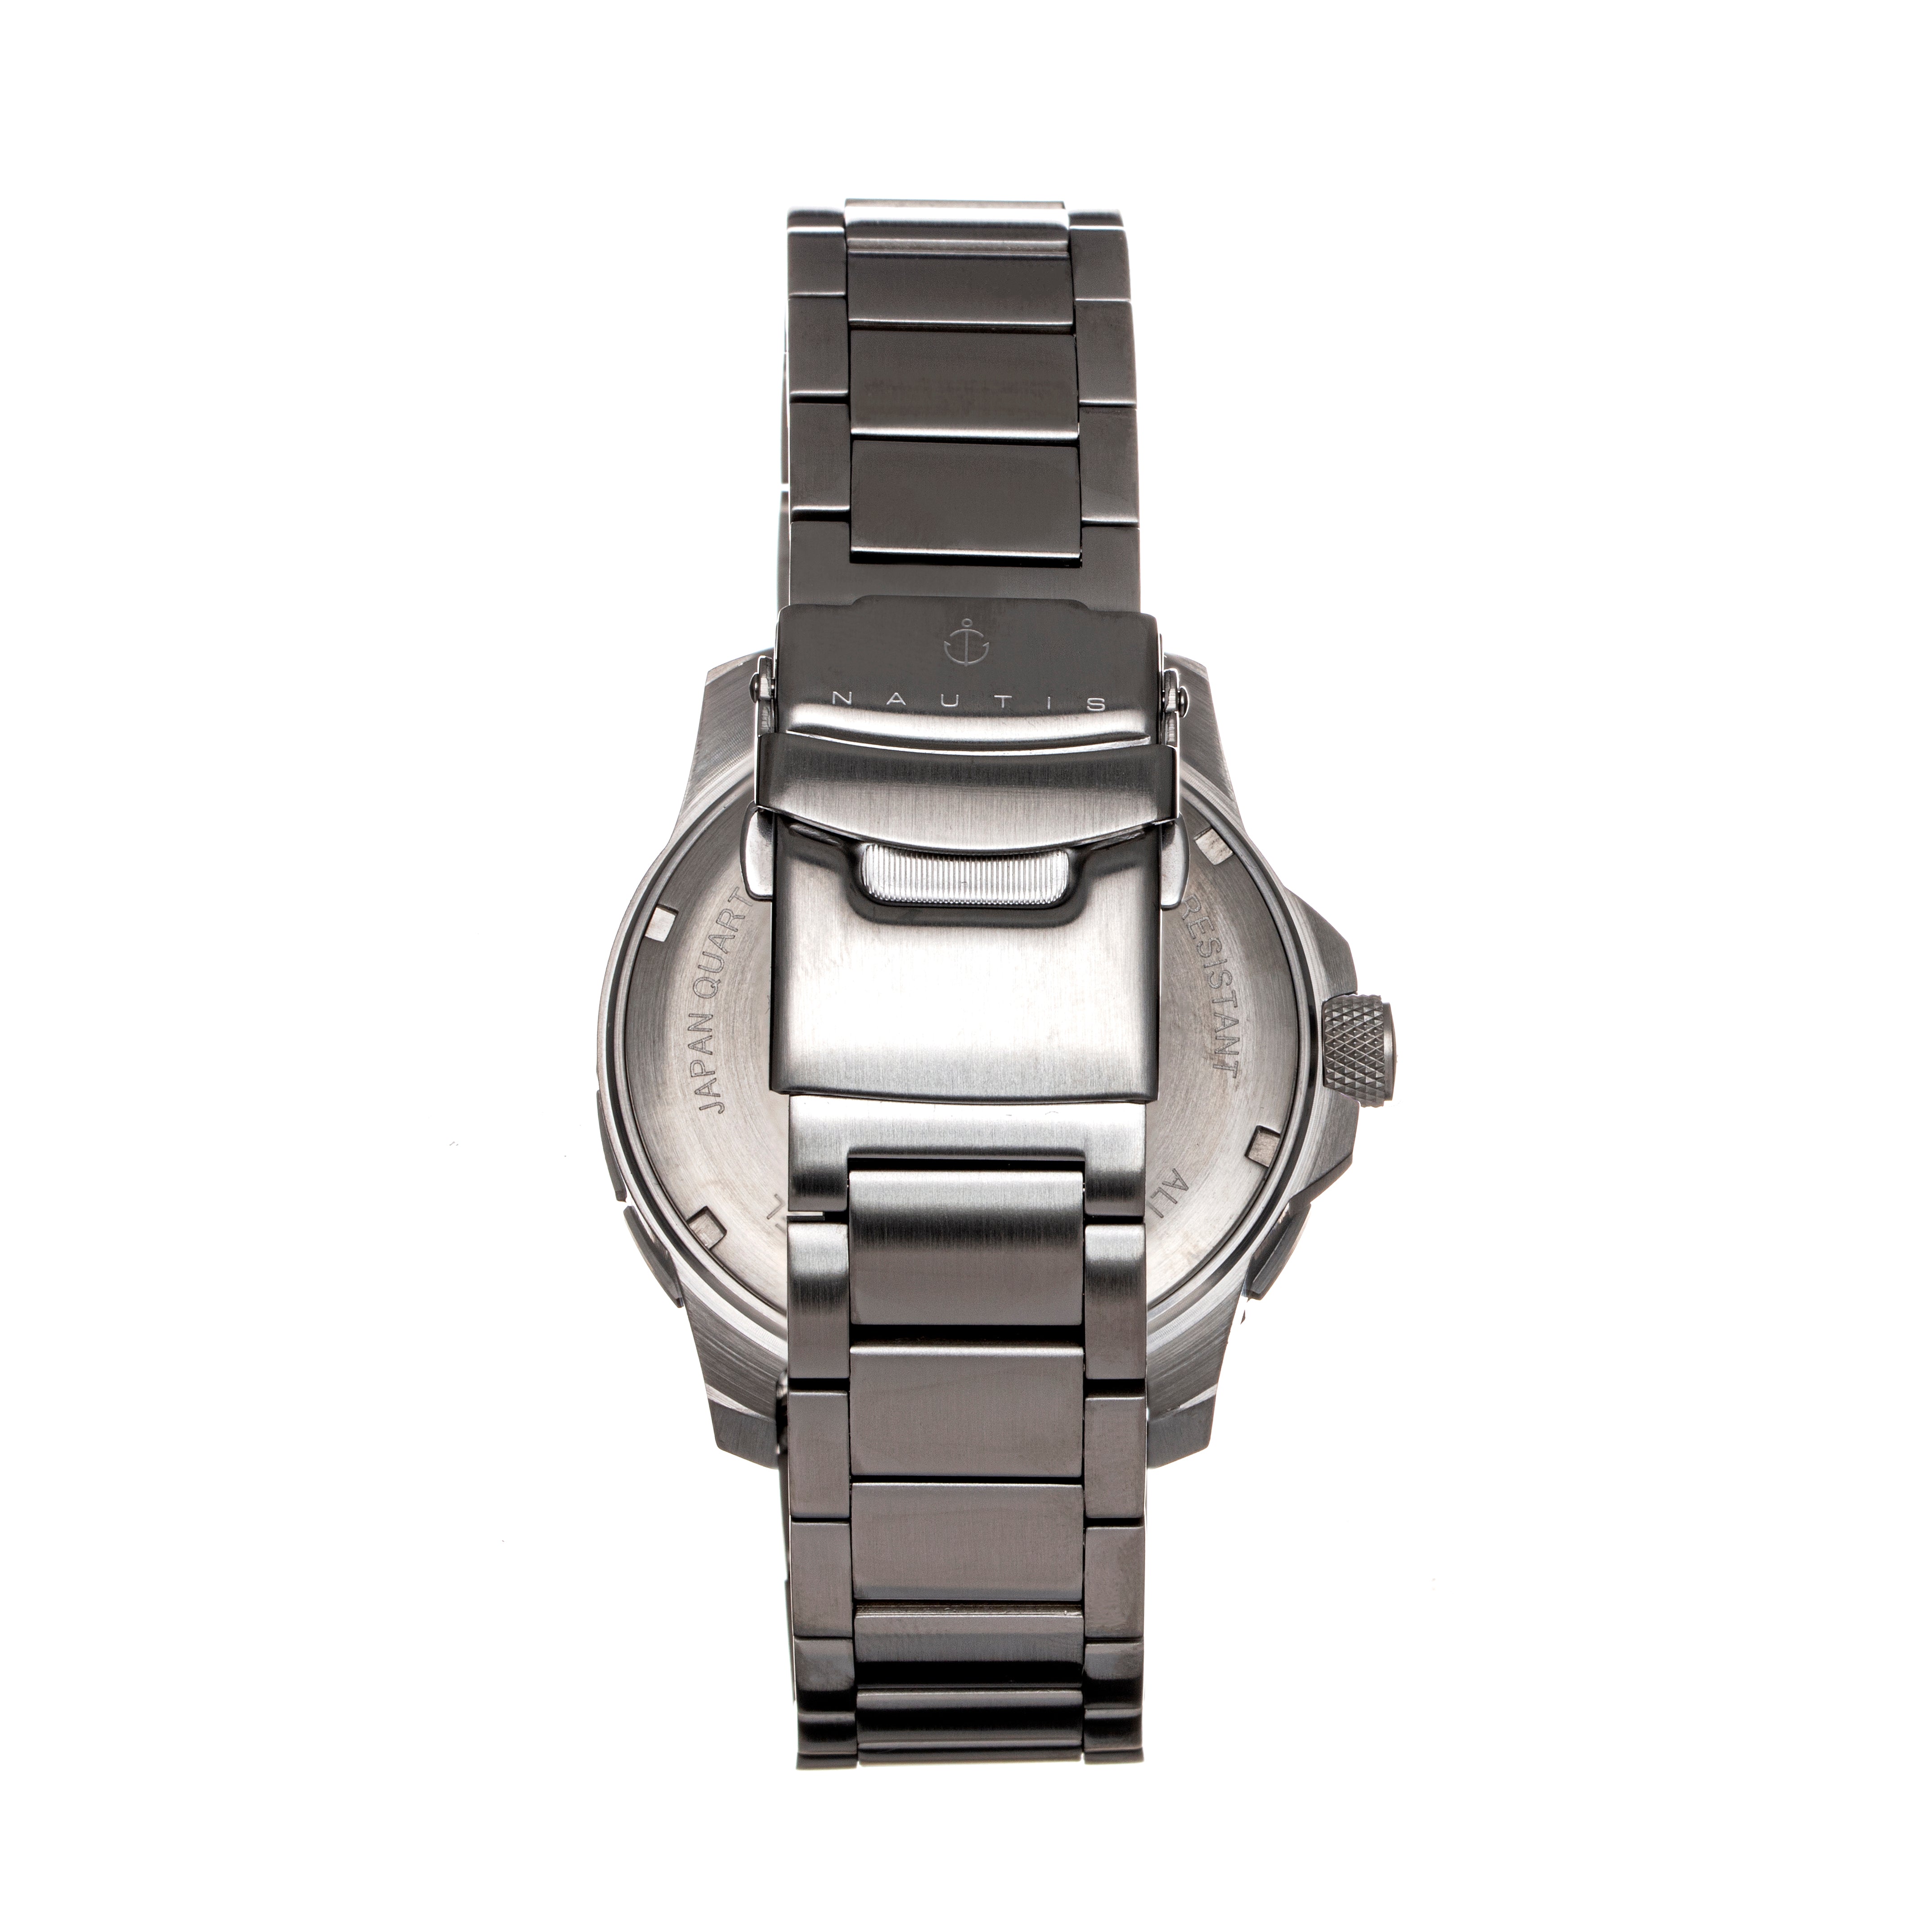 Nautis Admiralty Pro 200 Bracelet Watch w/Date - Blue  - GL2008-E